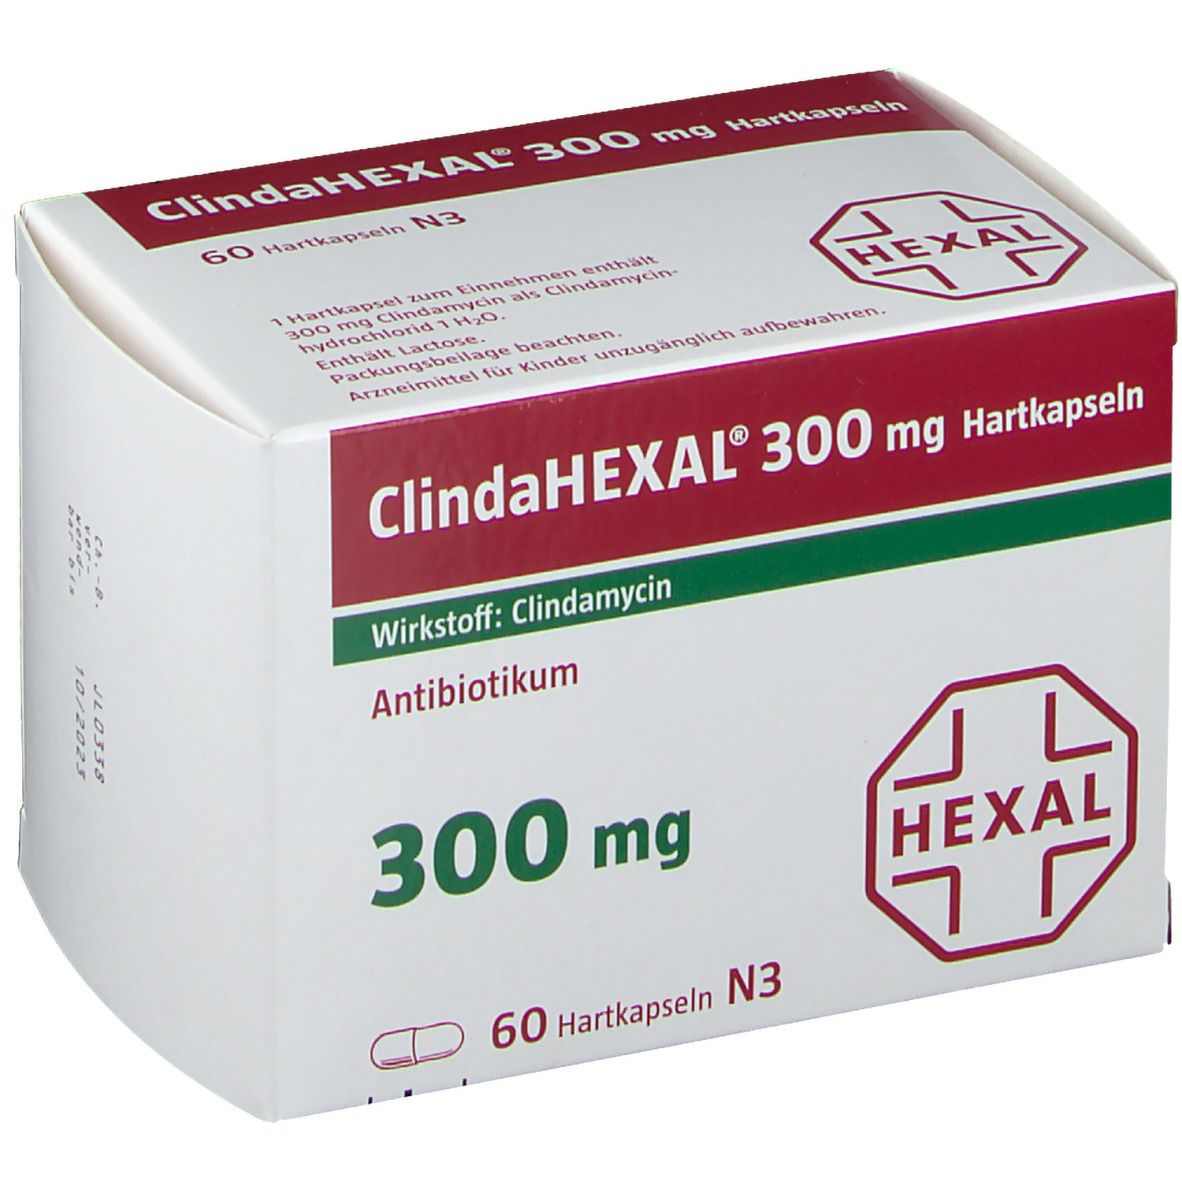 ClindaHEXAL® 300 mg